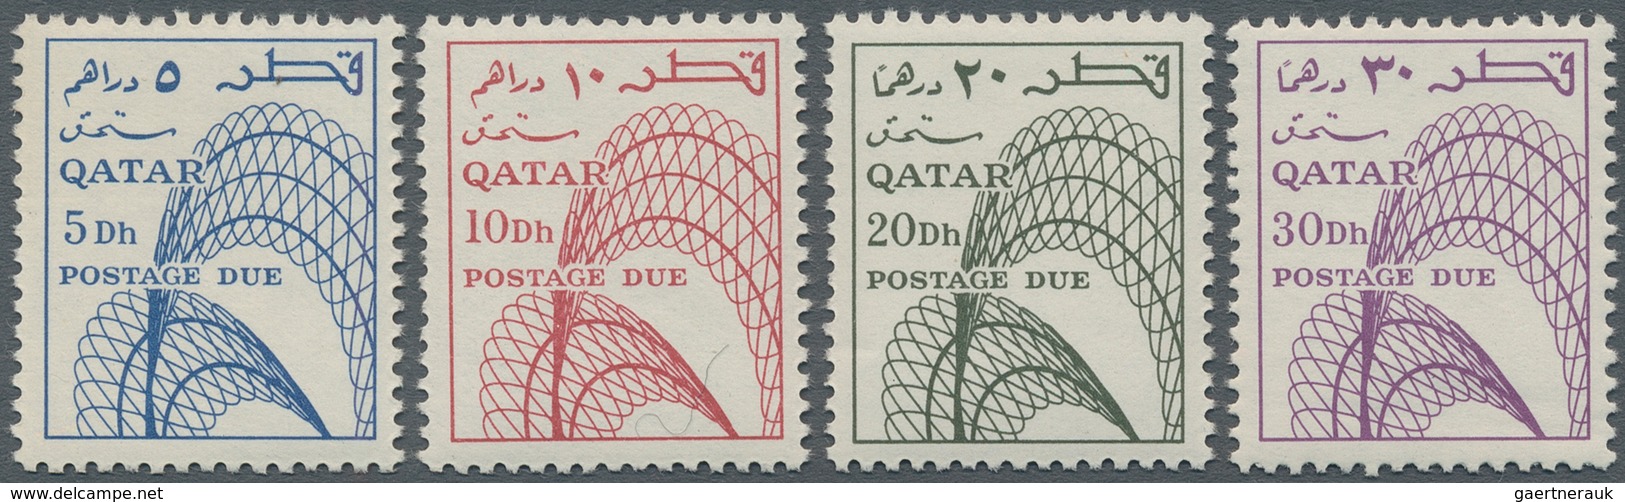 Katar / Qatar - Portomarken: 1967 Postage Due: Complete Set Of Four, Mint Never Hinged, The 5d. Ligh - Qatar